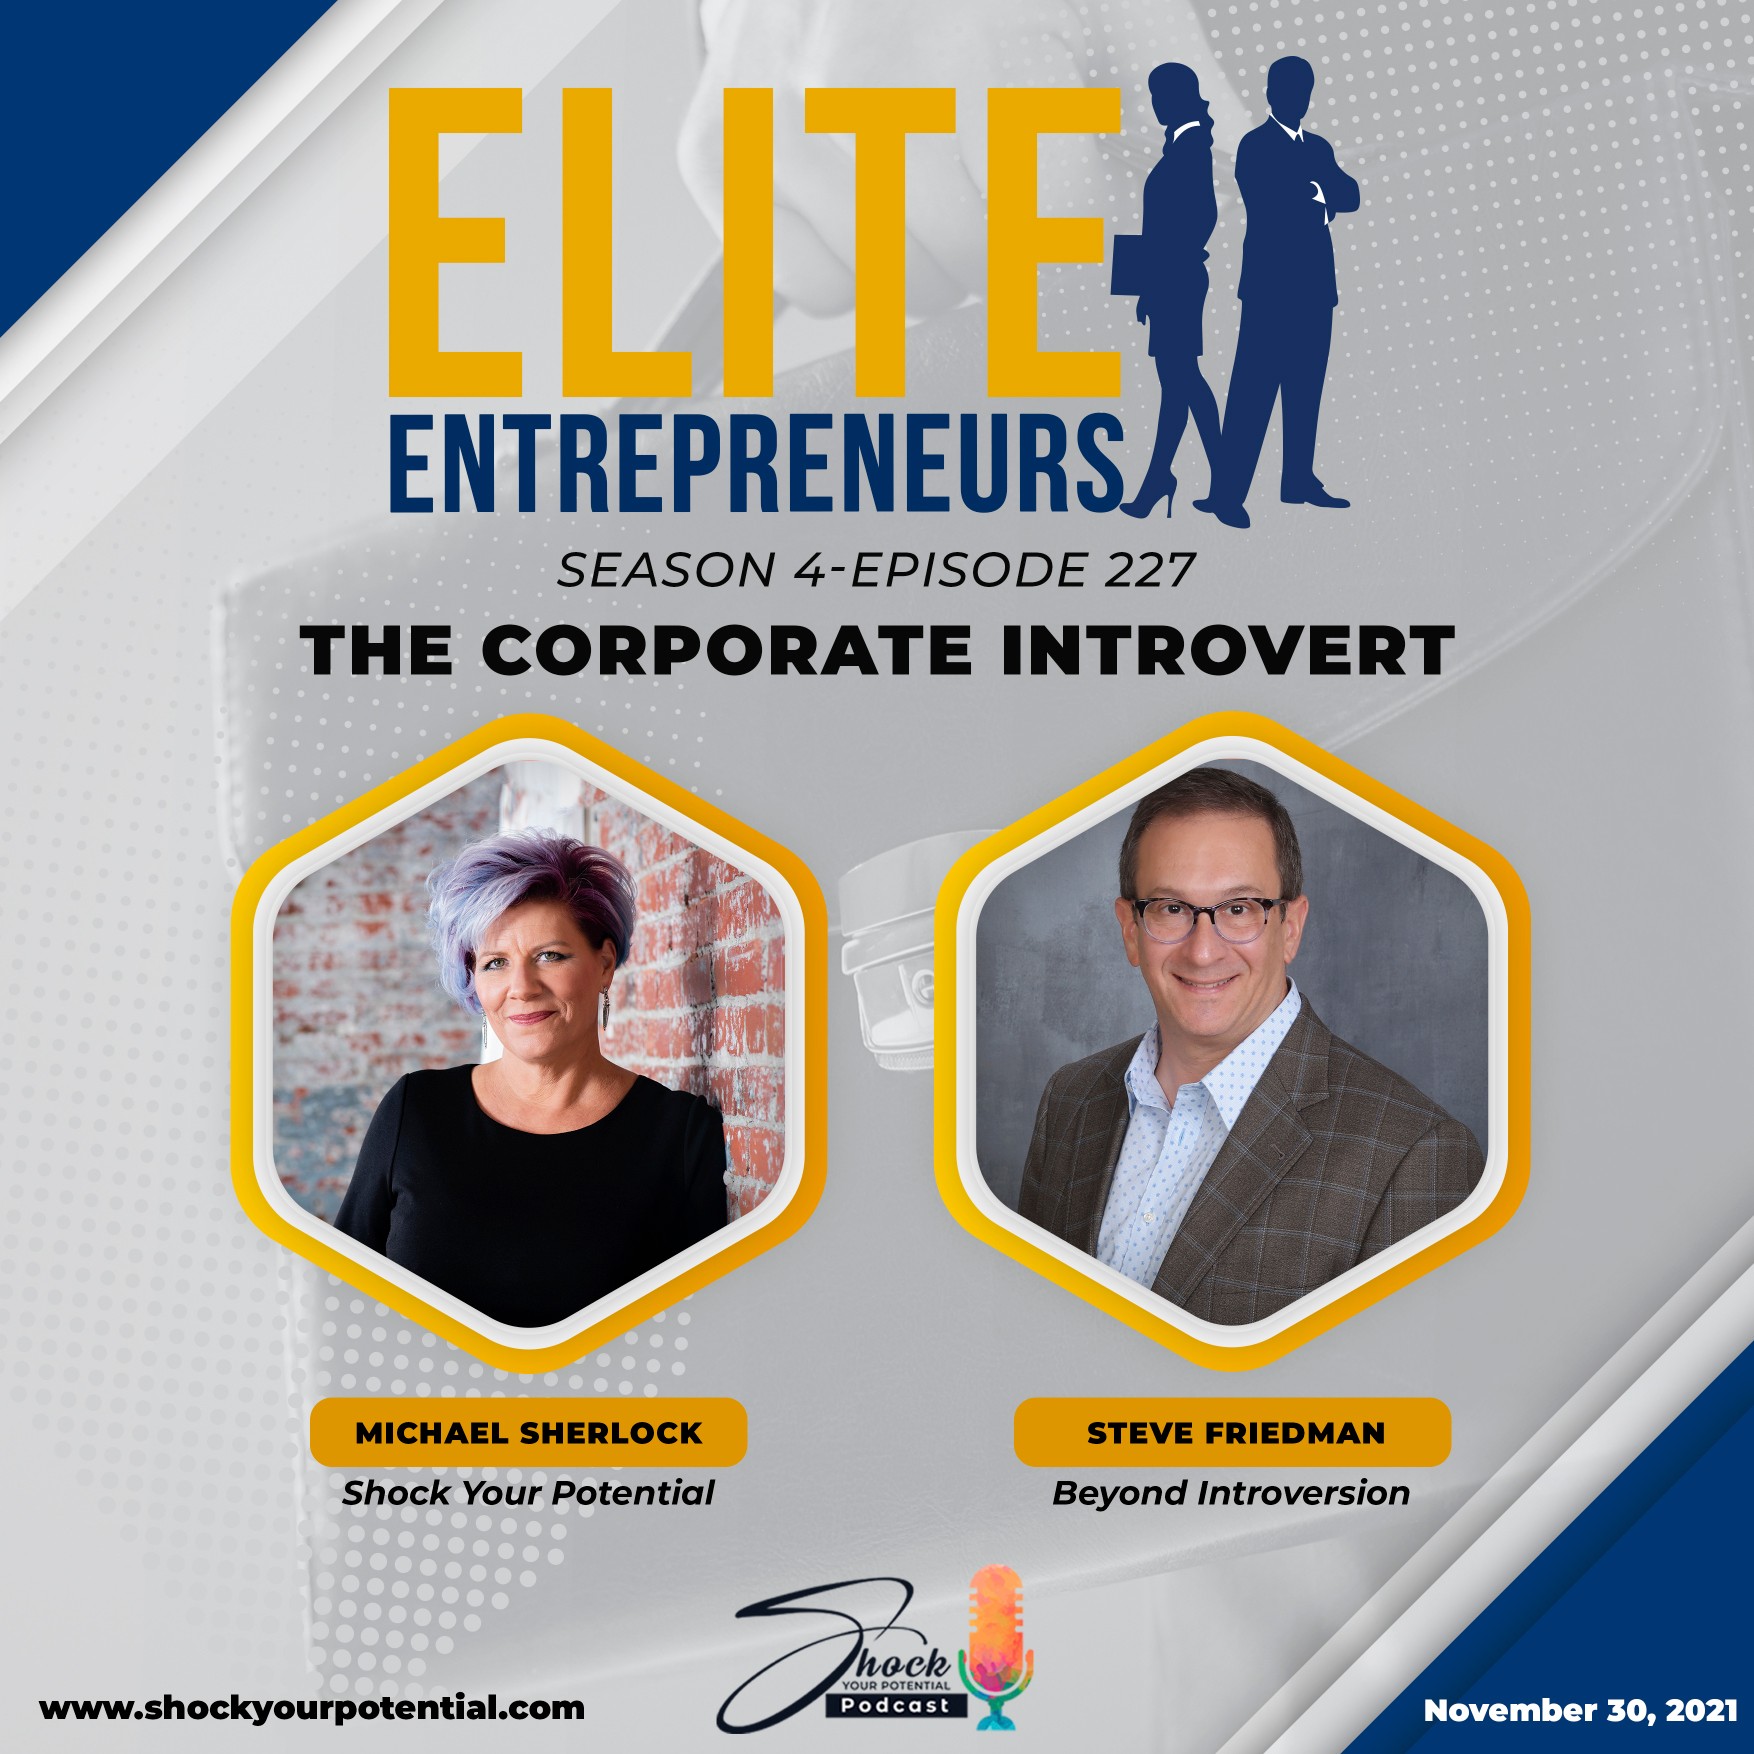 The Corporate Introvert – Steve Friedman